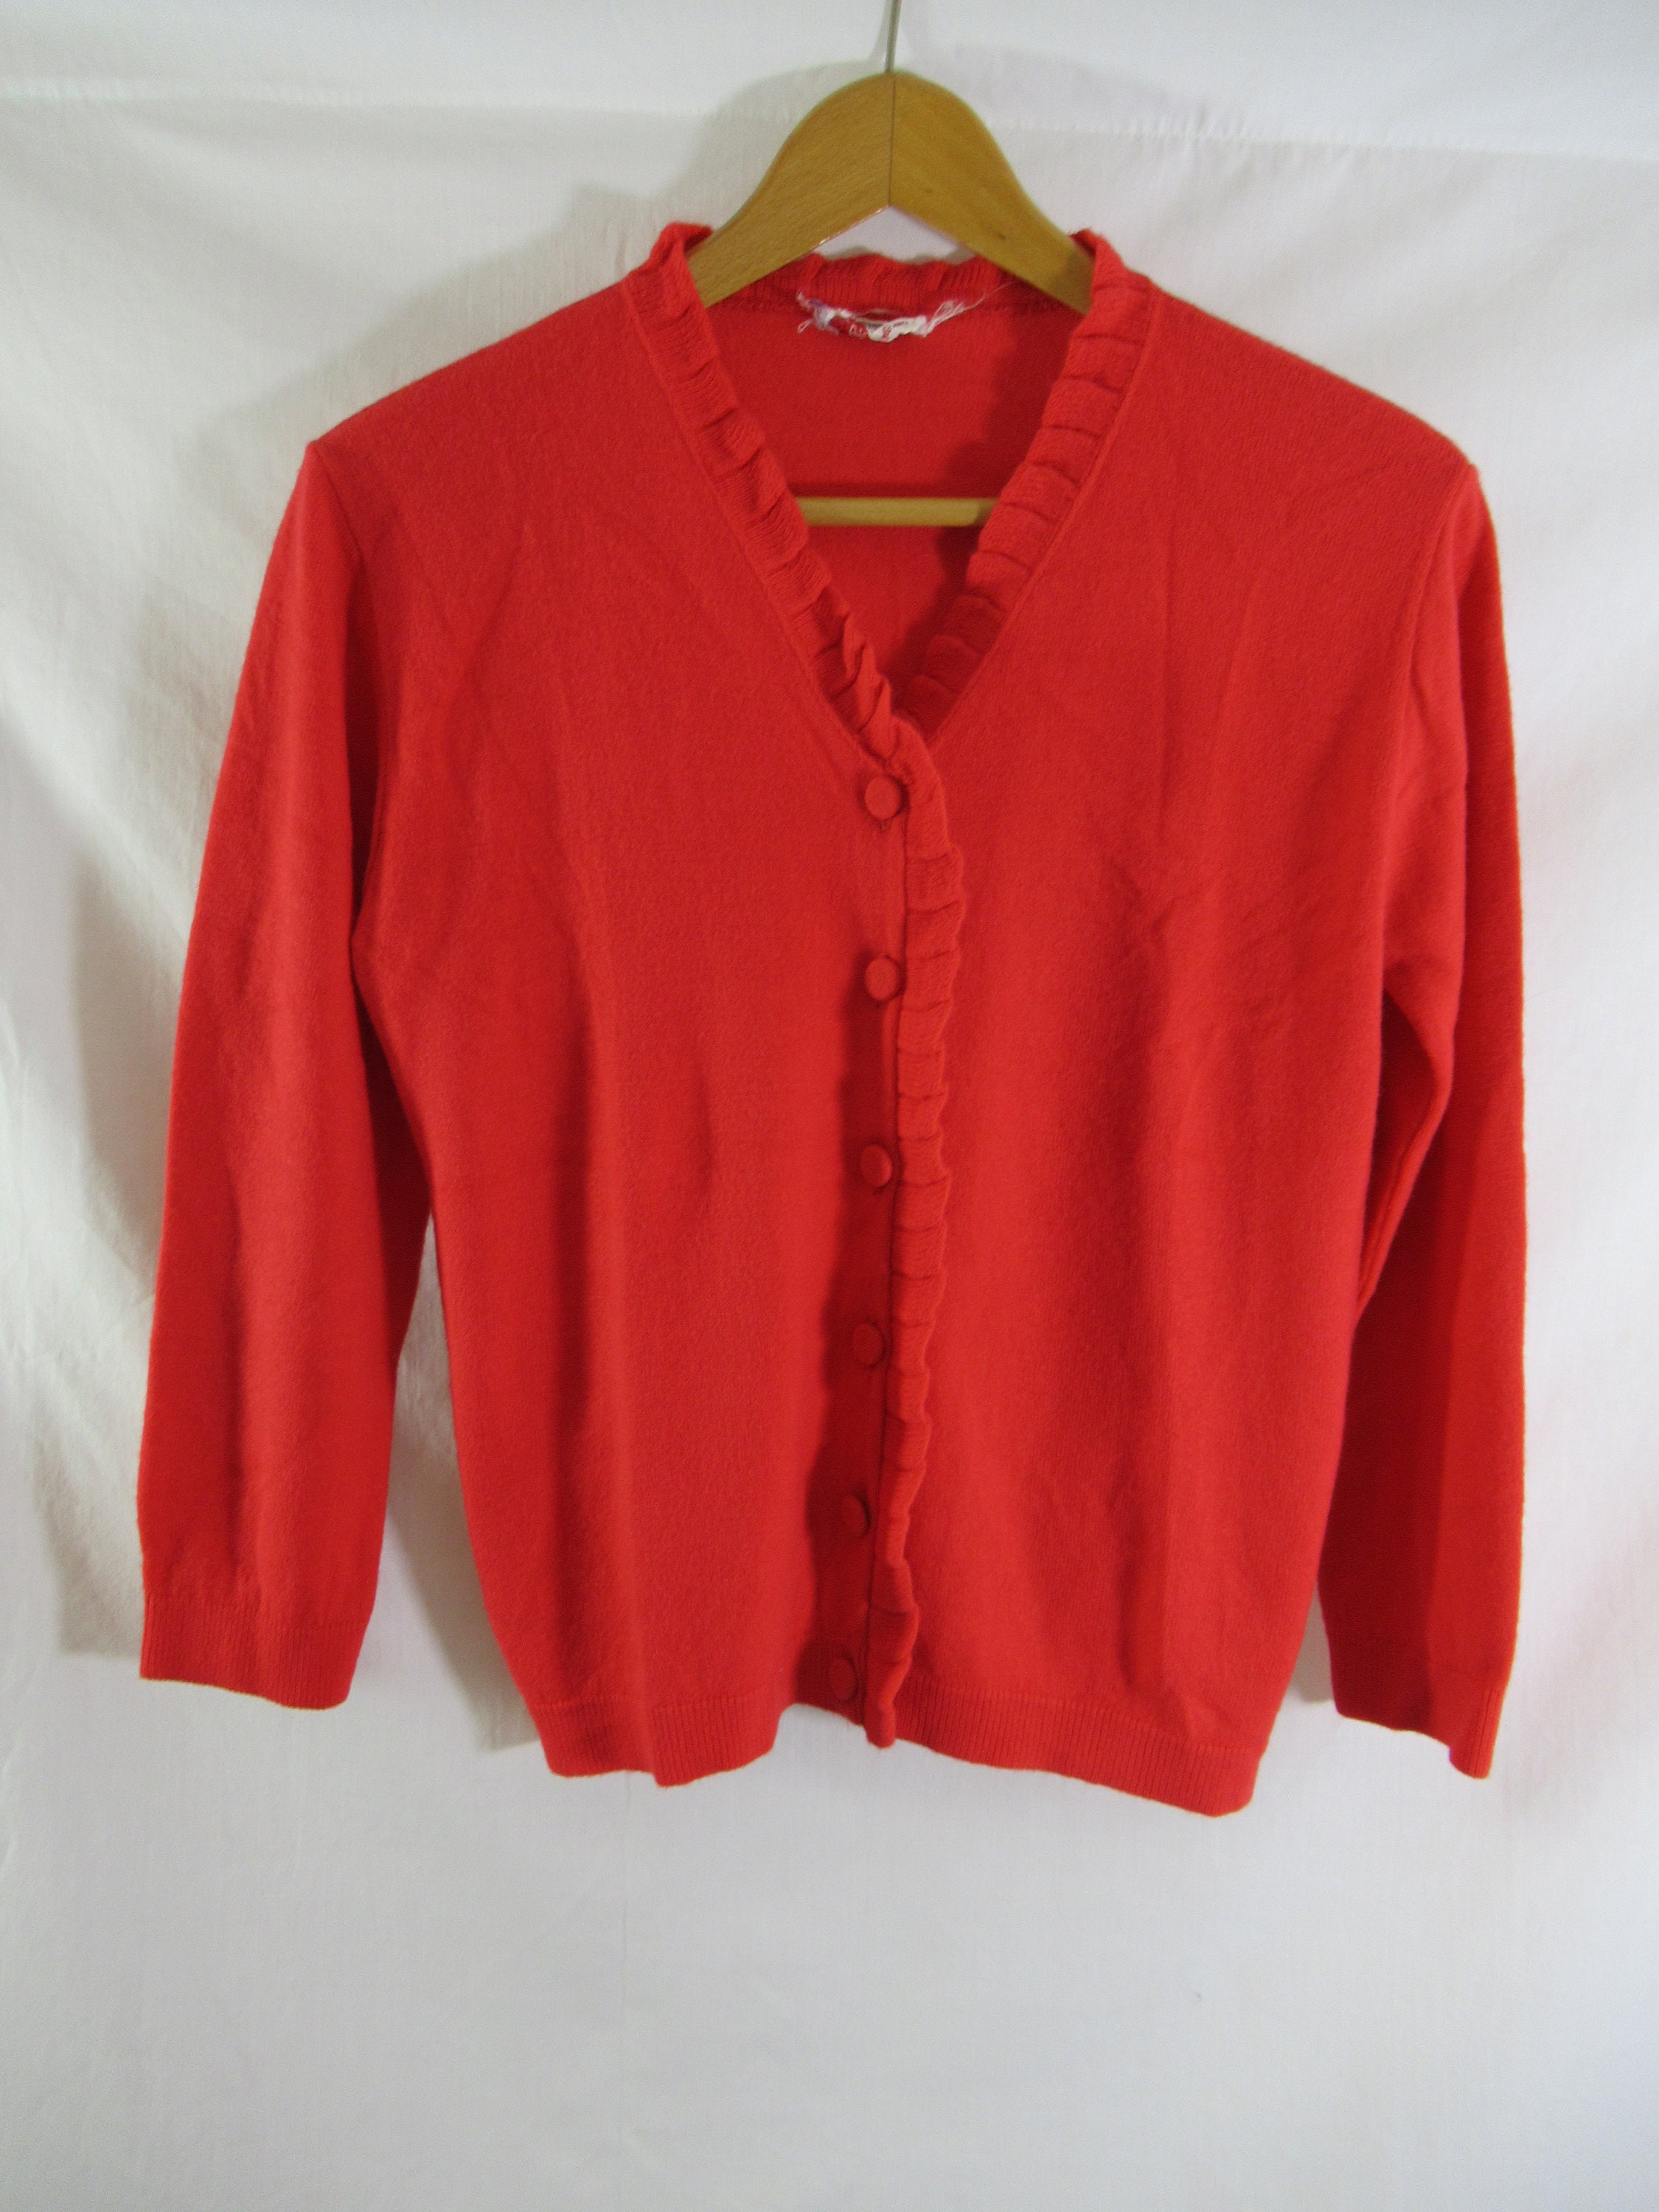 Red vintage cardigan sweater